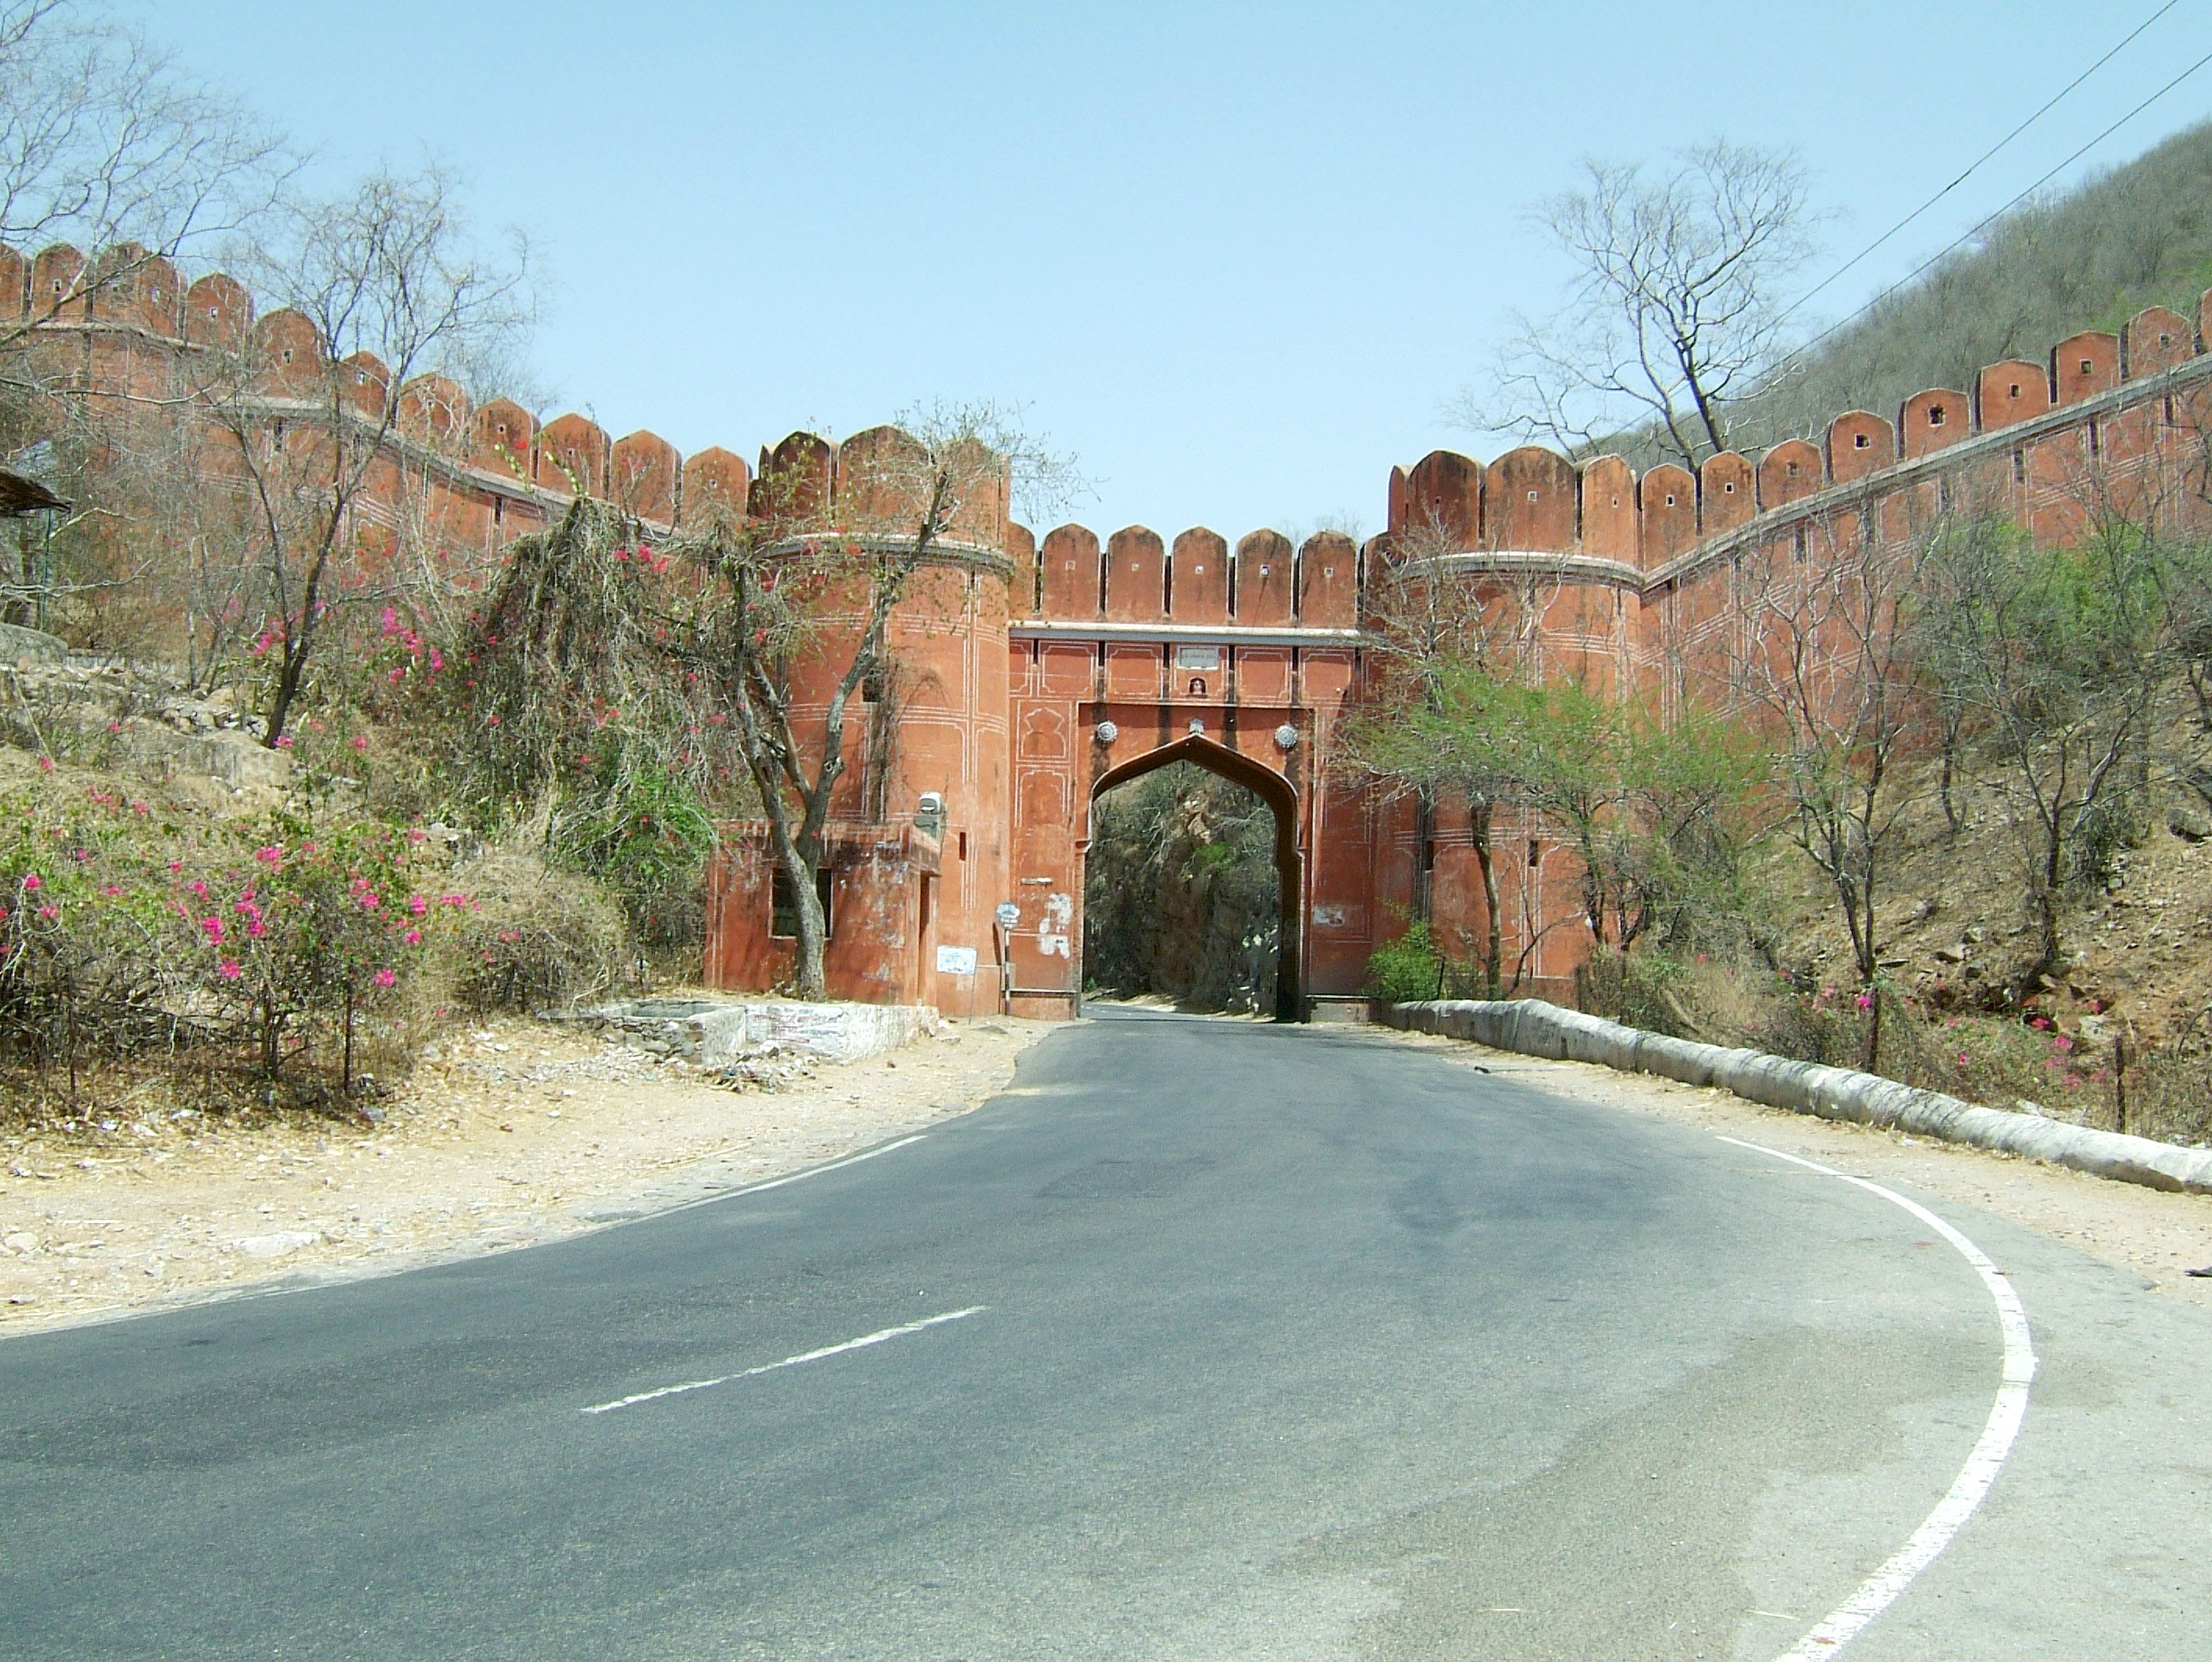 Rajasthan Jaipur Amber Fort main gate India Apr 2004 01